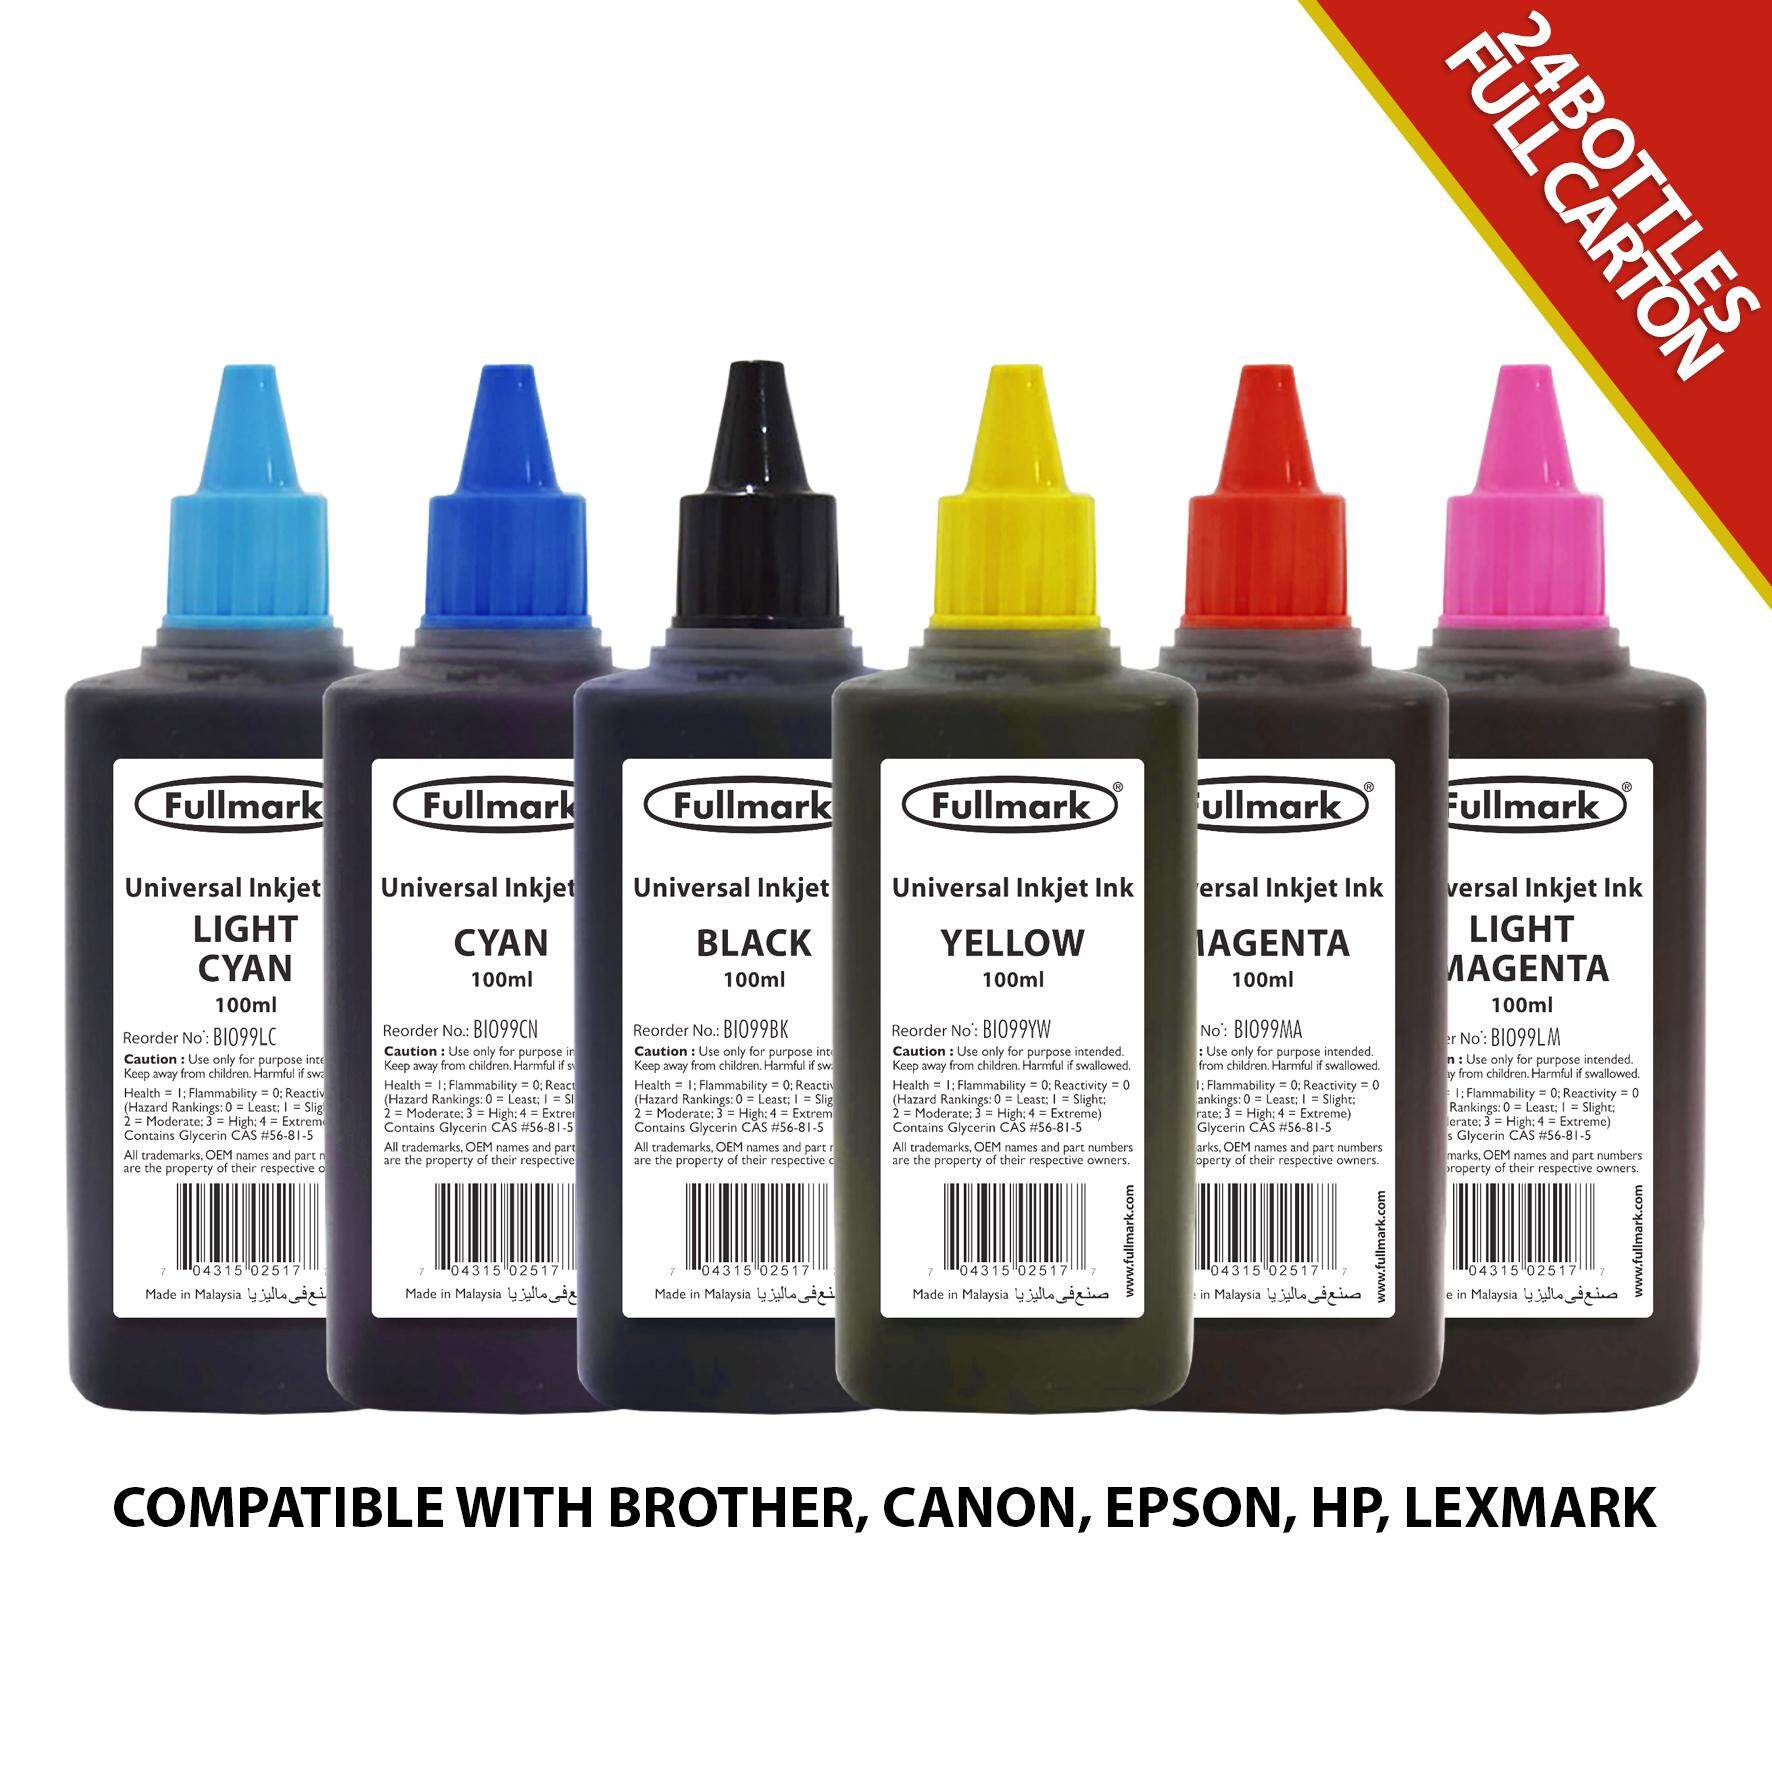 Fullmark Inkjet Ink Refill Universal for Canon / HP / Epson / Brother / Lexmark Printer , 24 x 100ml (1 Carton) BI099